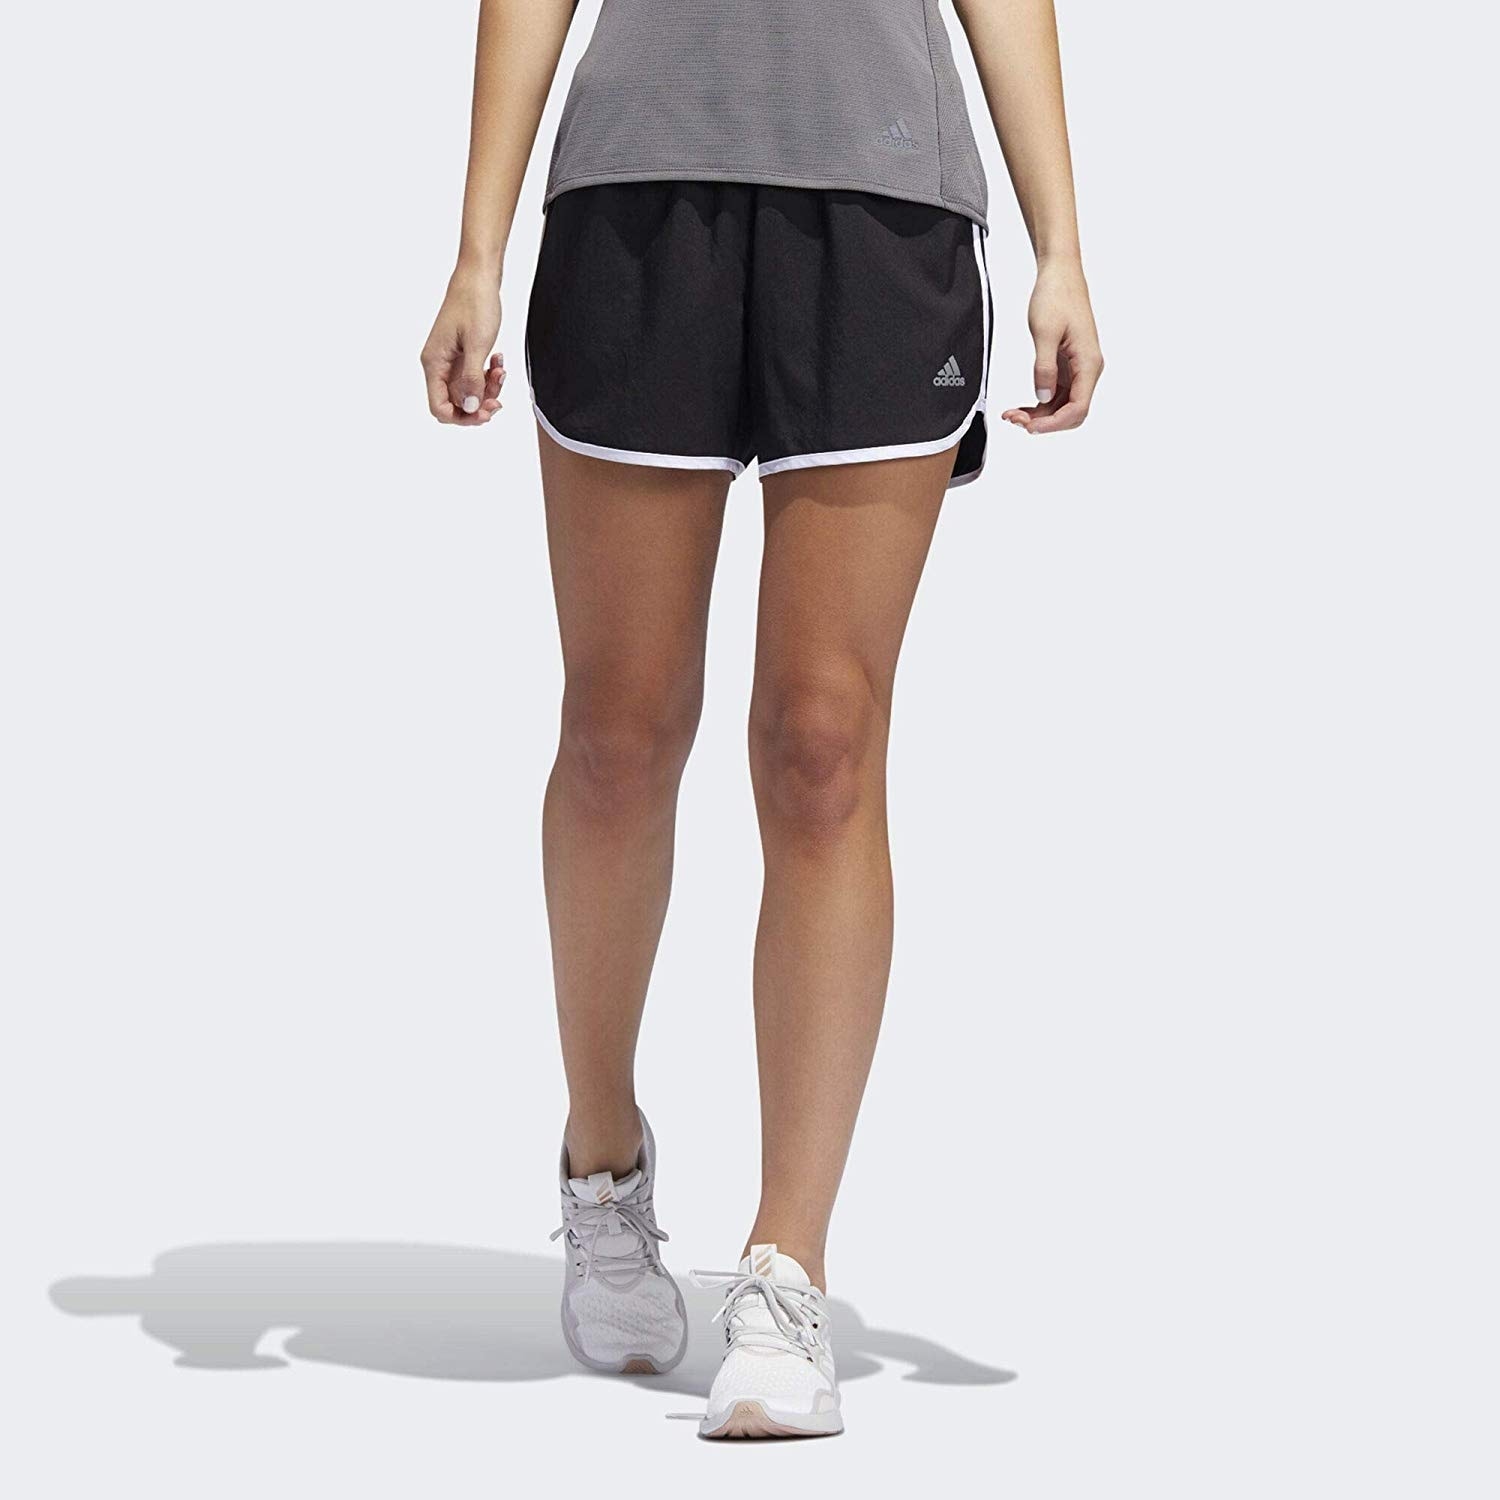 adidas women's m20 4 shorts